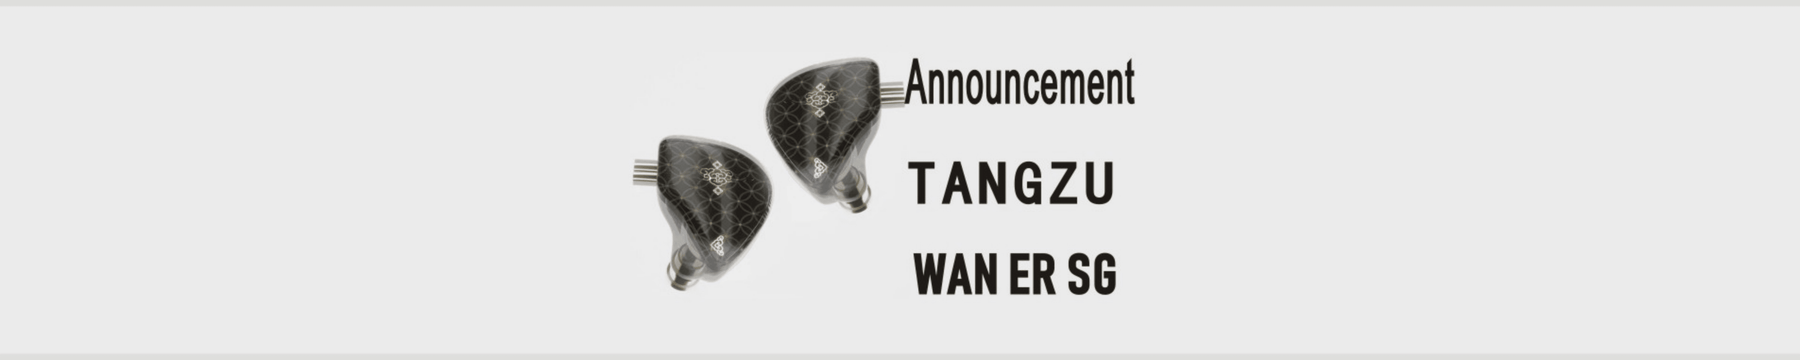 TANGZU Audio Introduces Waner SG Brand New Single-Dynamic Driver HIFi IEMs